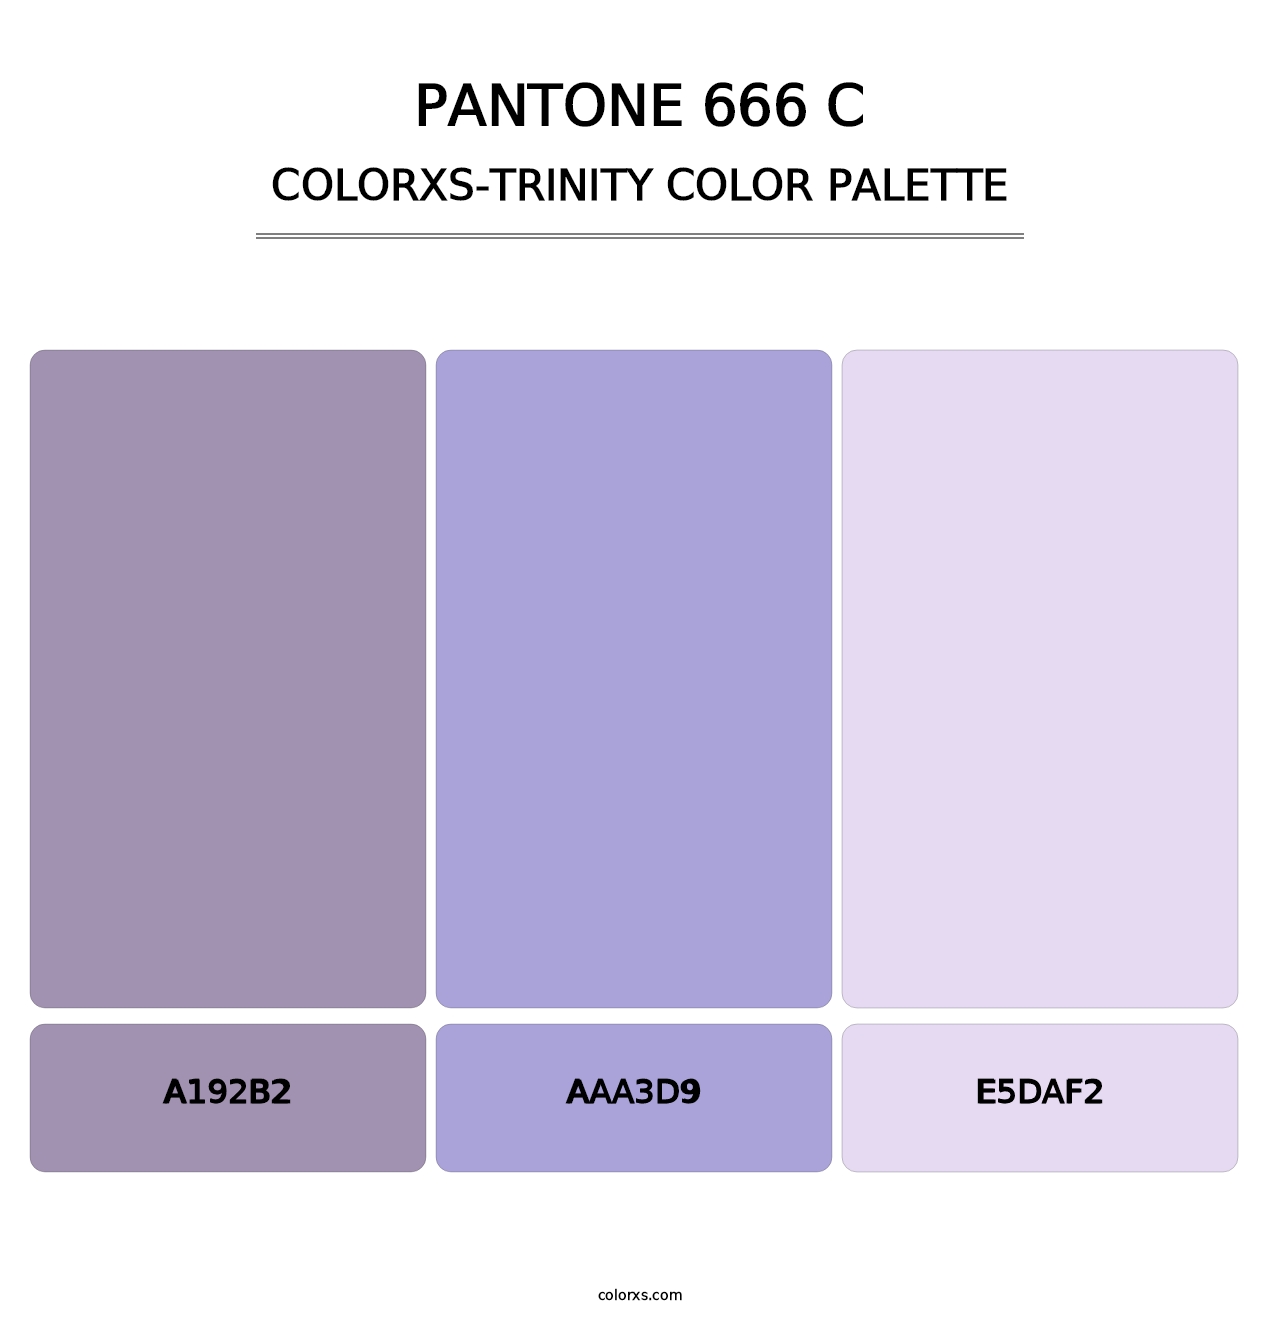 PANTONE 666 C - Colorxs Trinity Palette